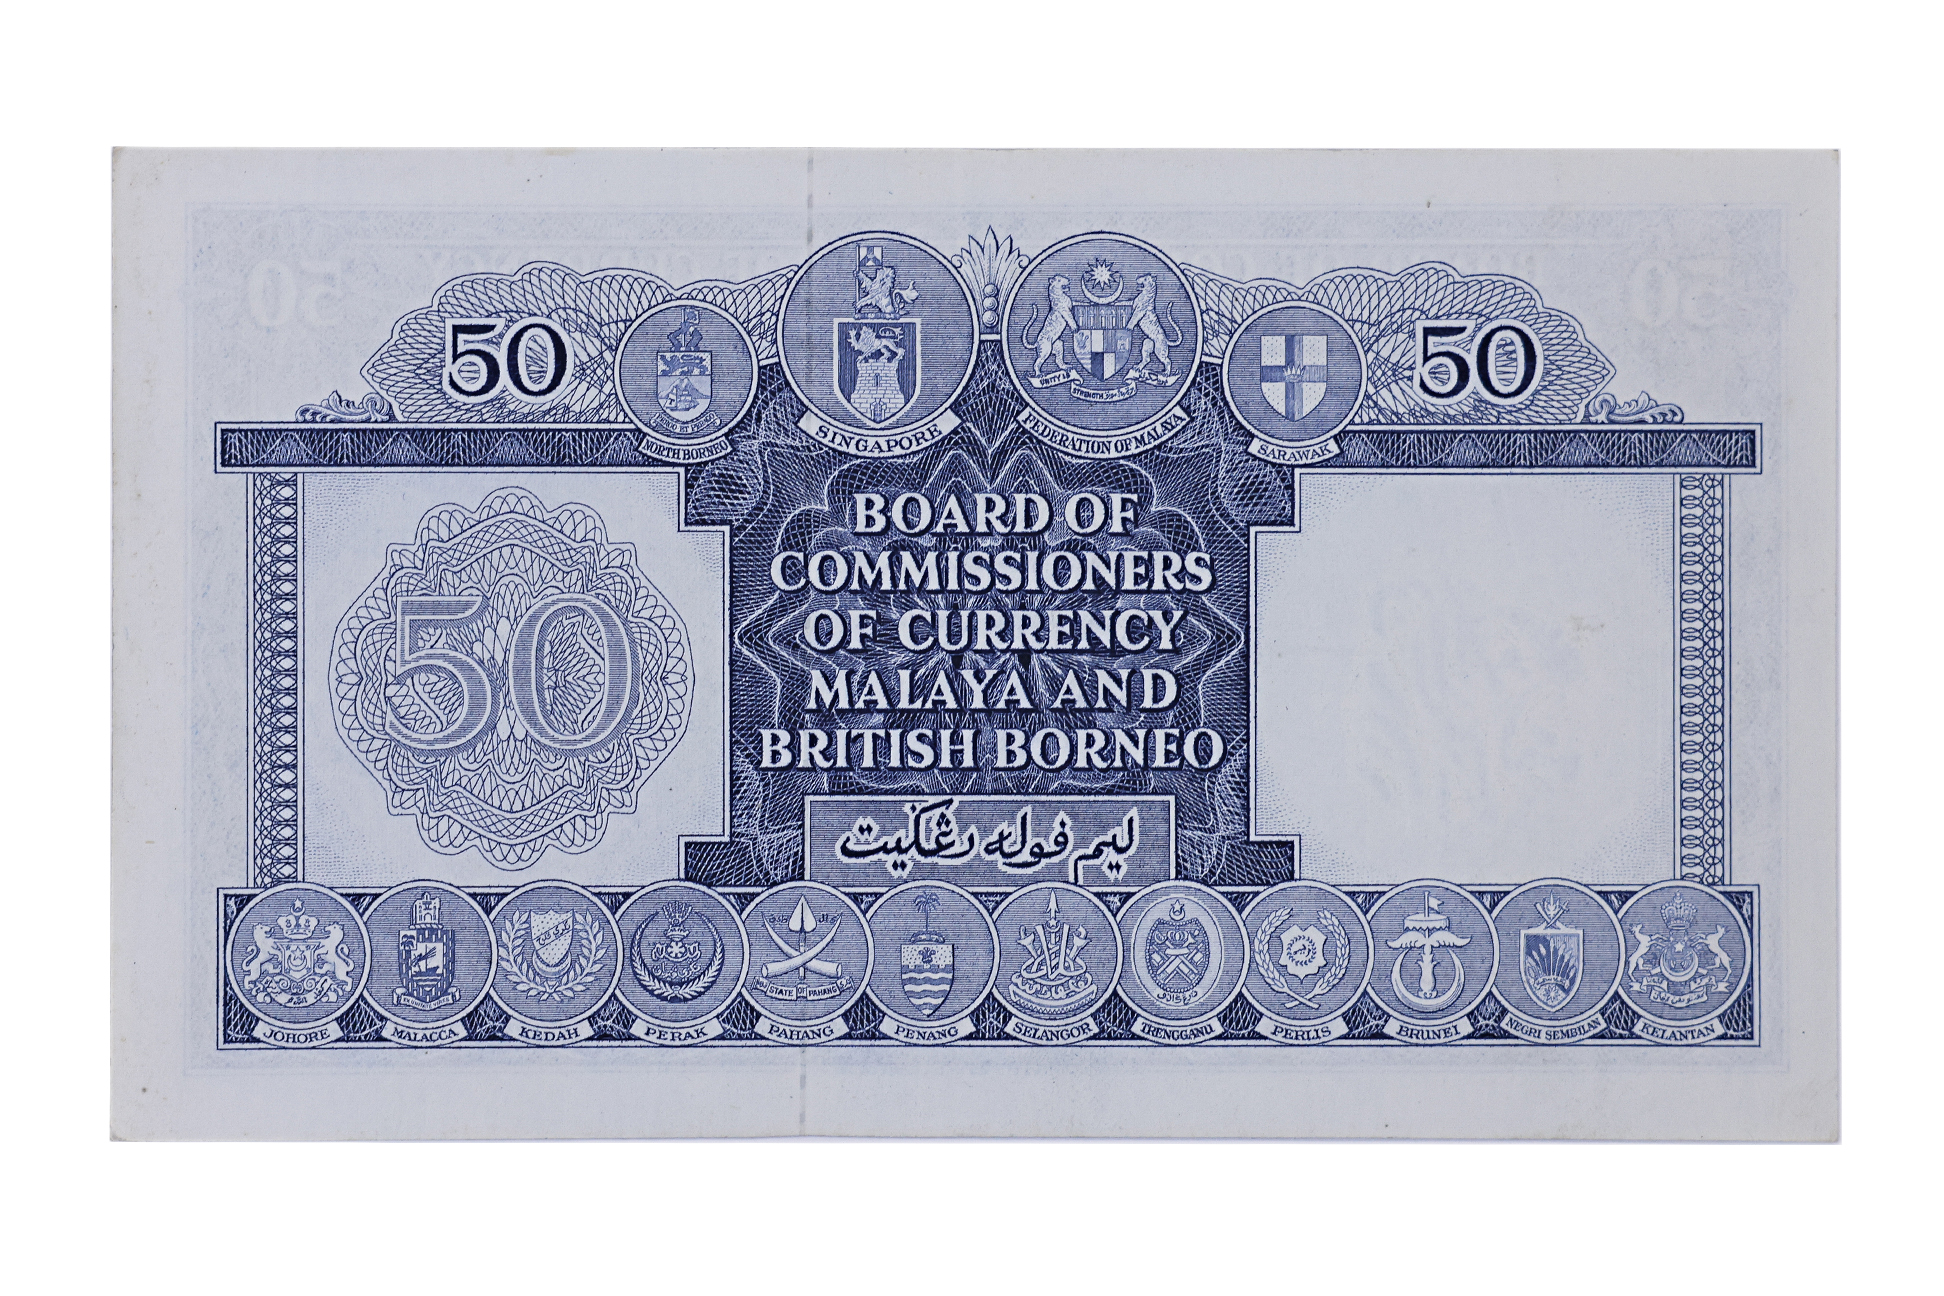 MALAYA AND BRITISH BORNEO 50 DOLLARS 1953 - Image 2 of 7